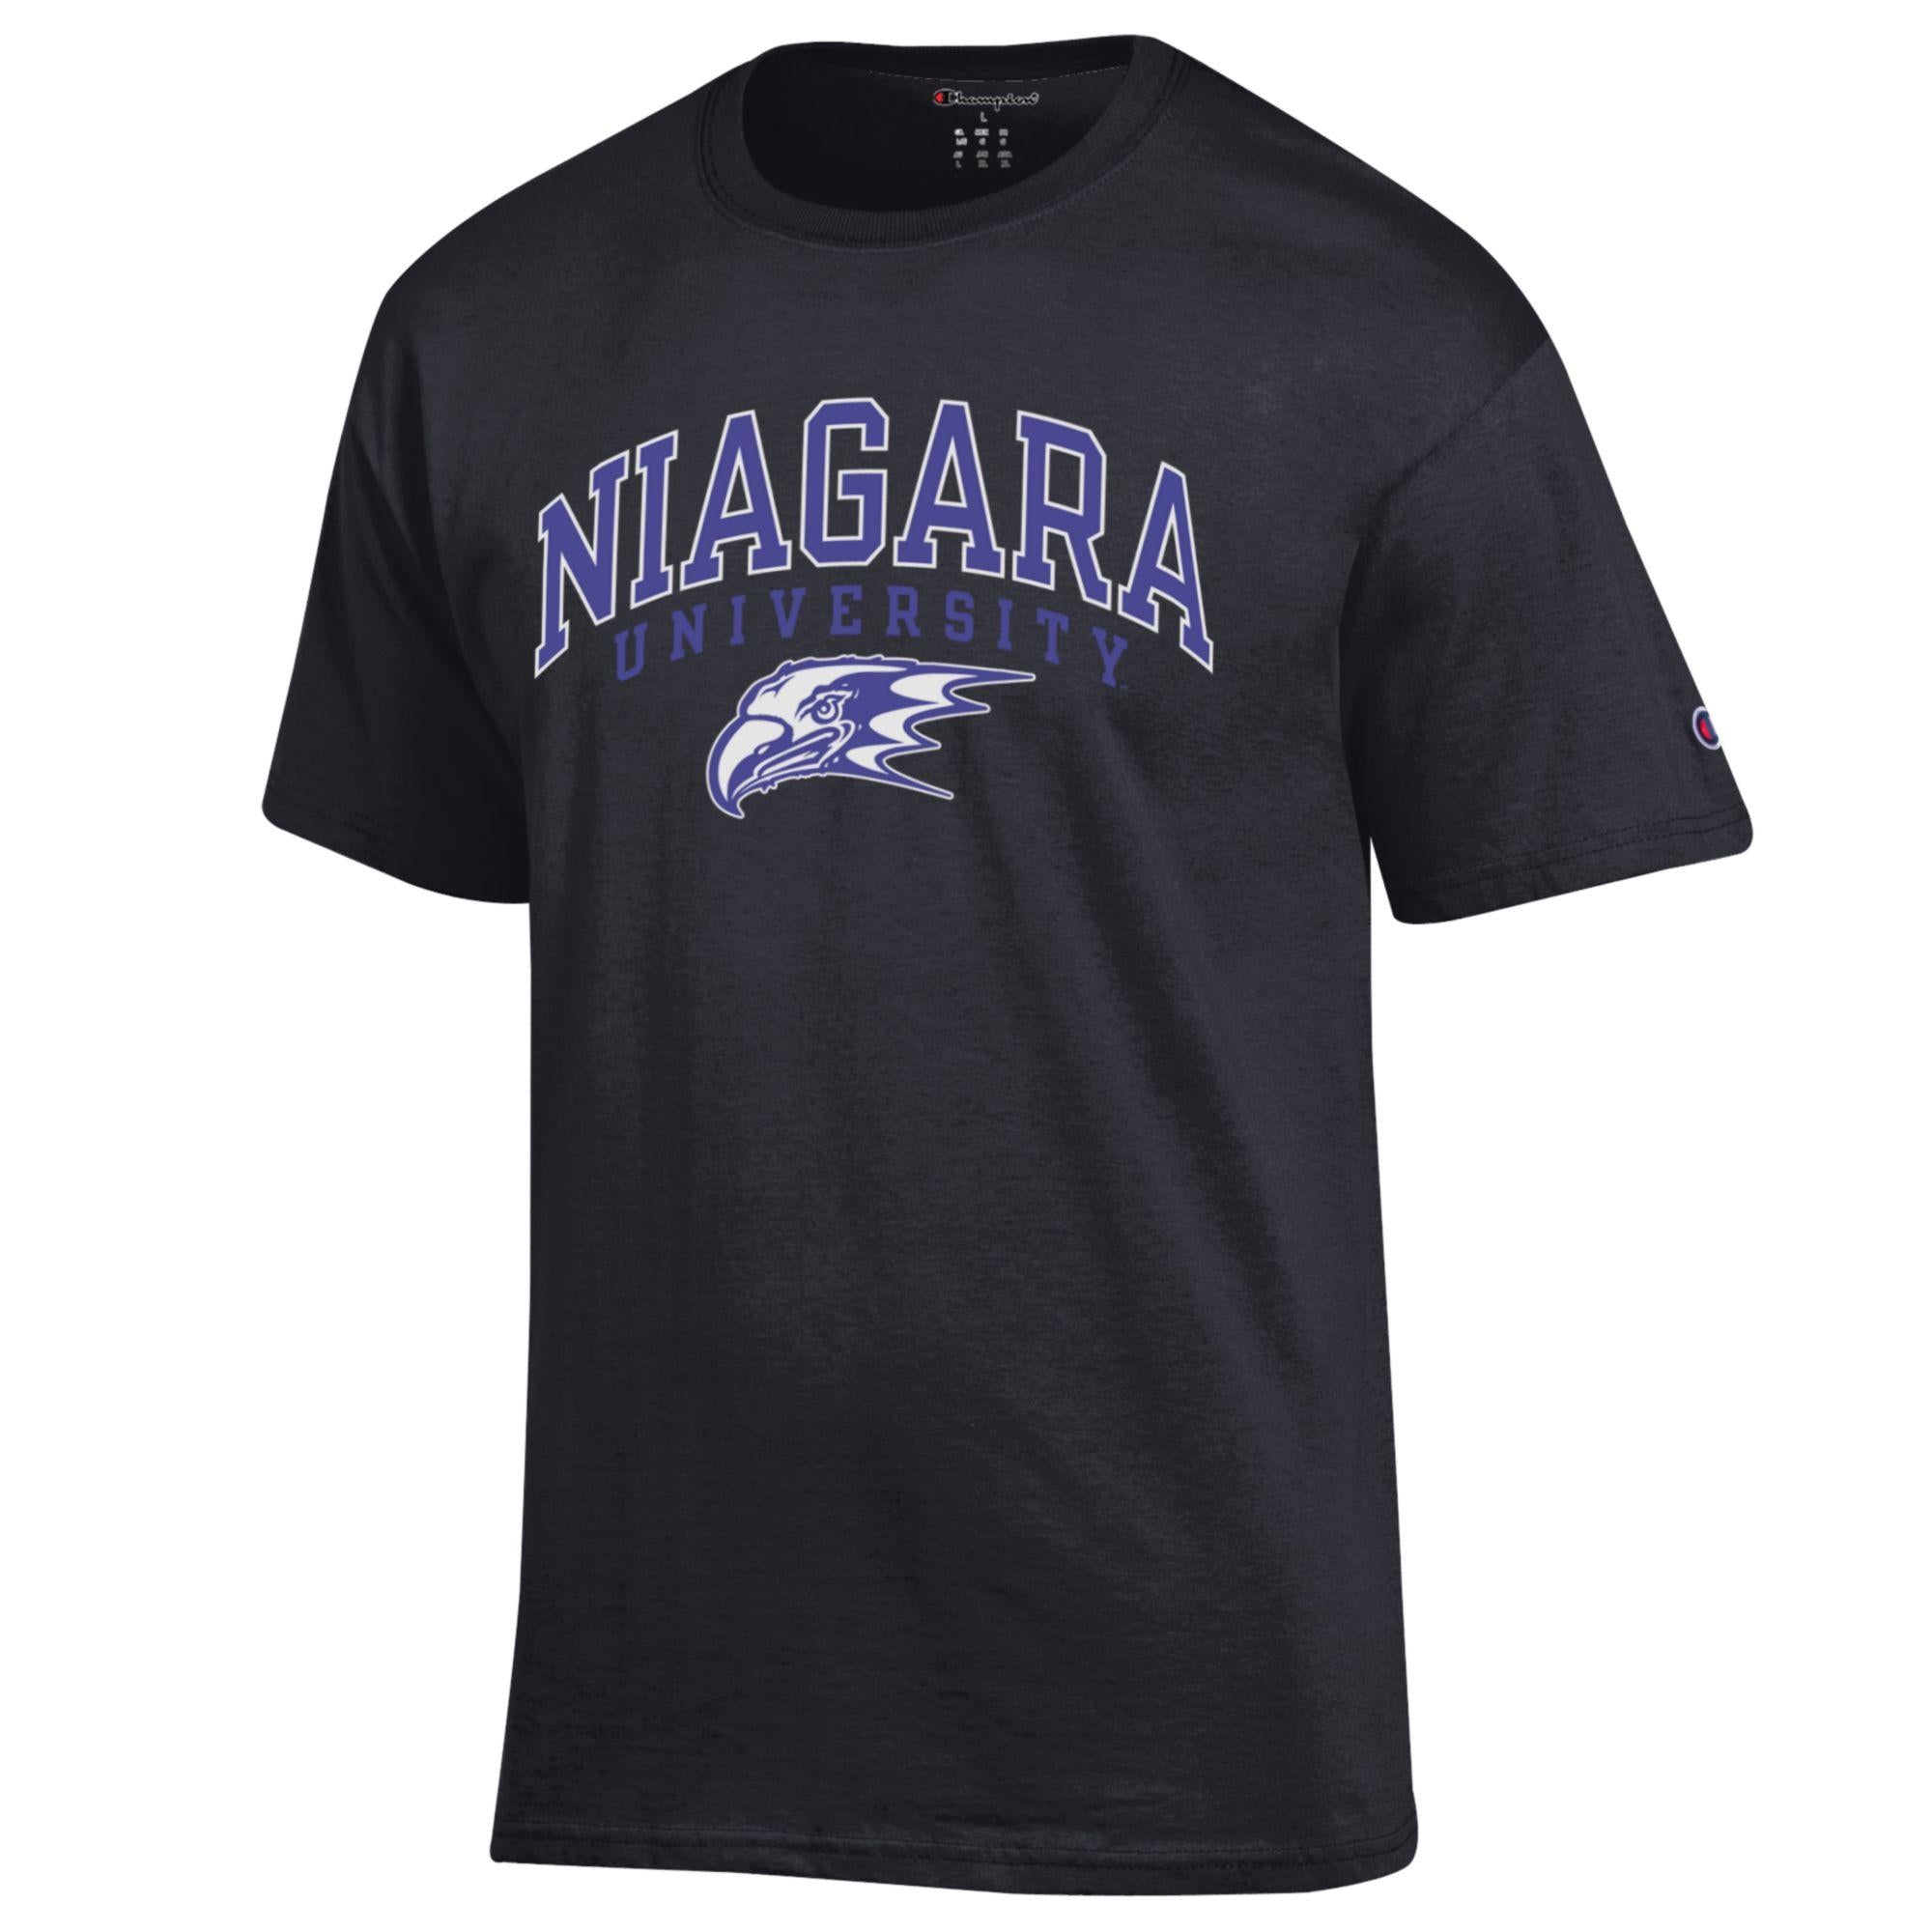 Niagara University T-shirt Black - TeeShirtUniversity.com 